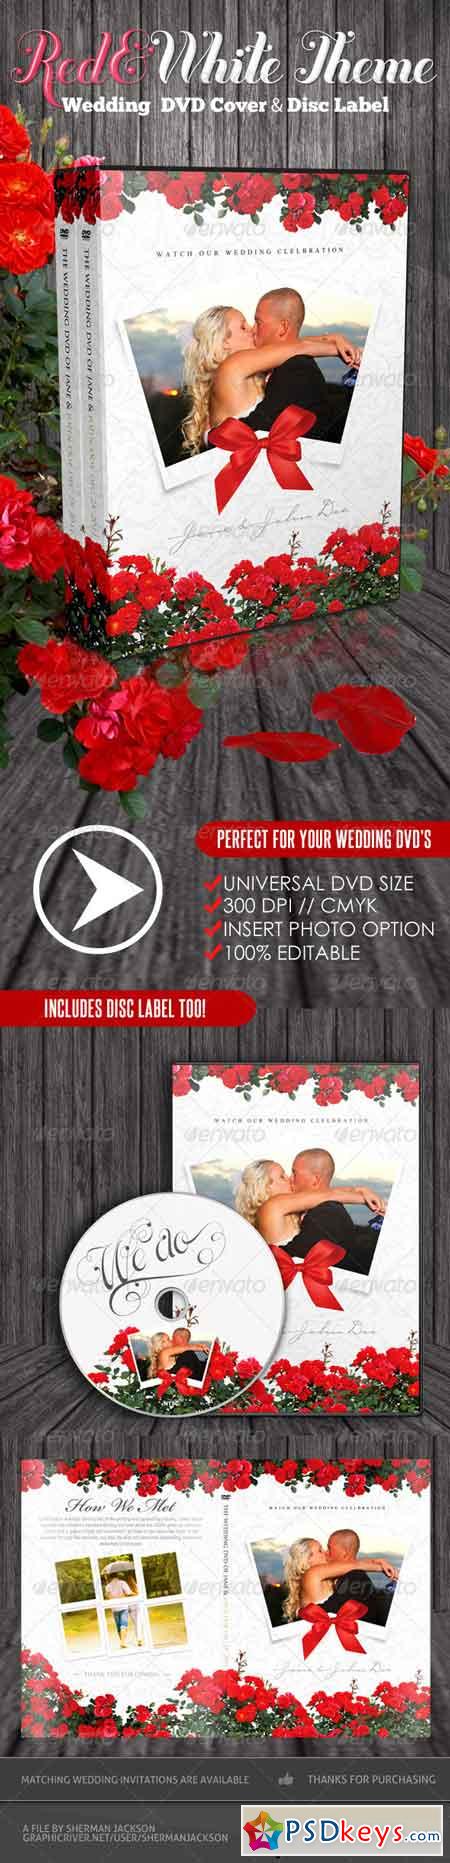 Red & White Theme Wedding DVD & Disc Label 1566900